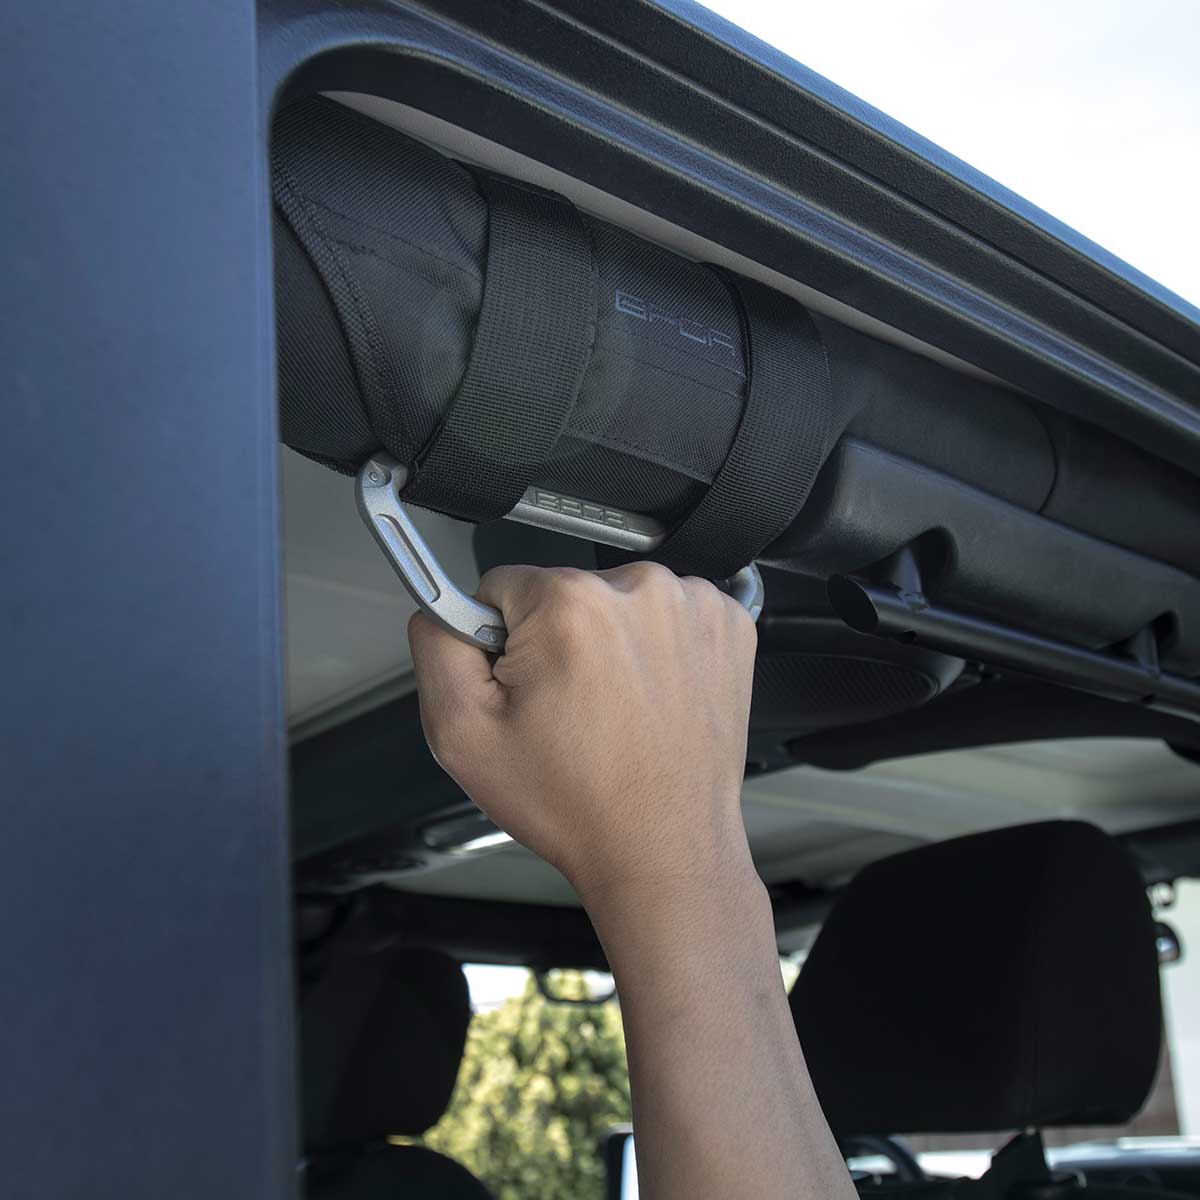 Jeep Wrangler 2017 grab handle GP-Grip Pro passenger